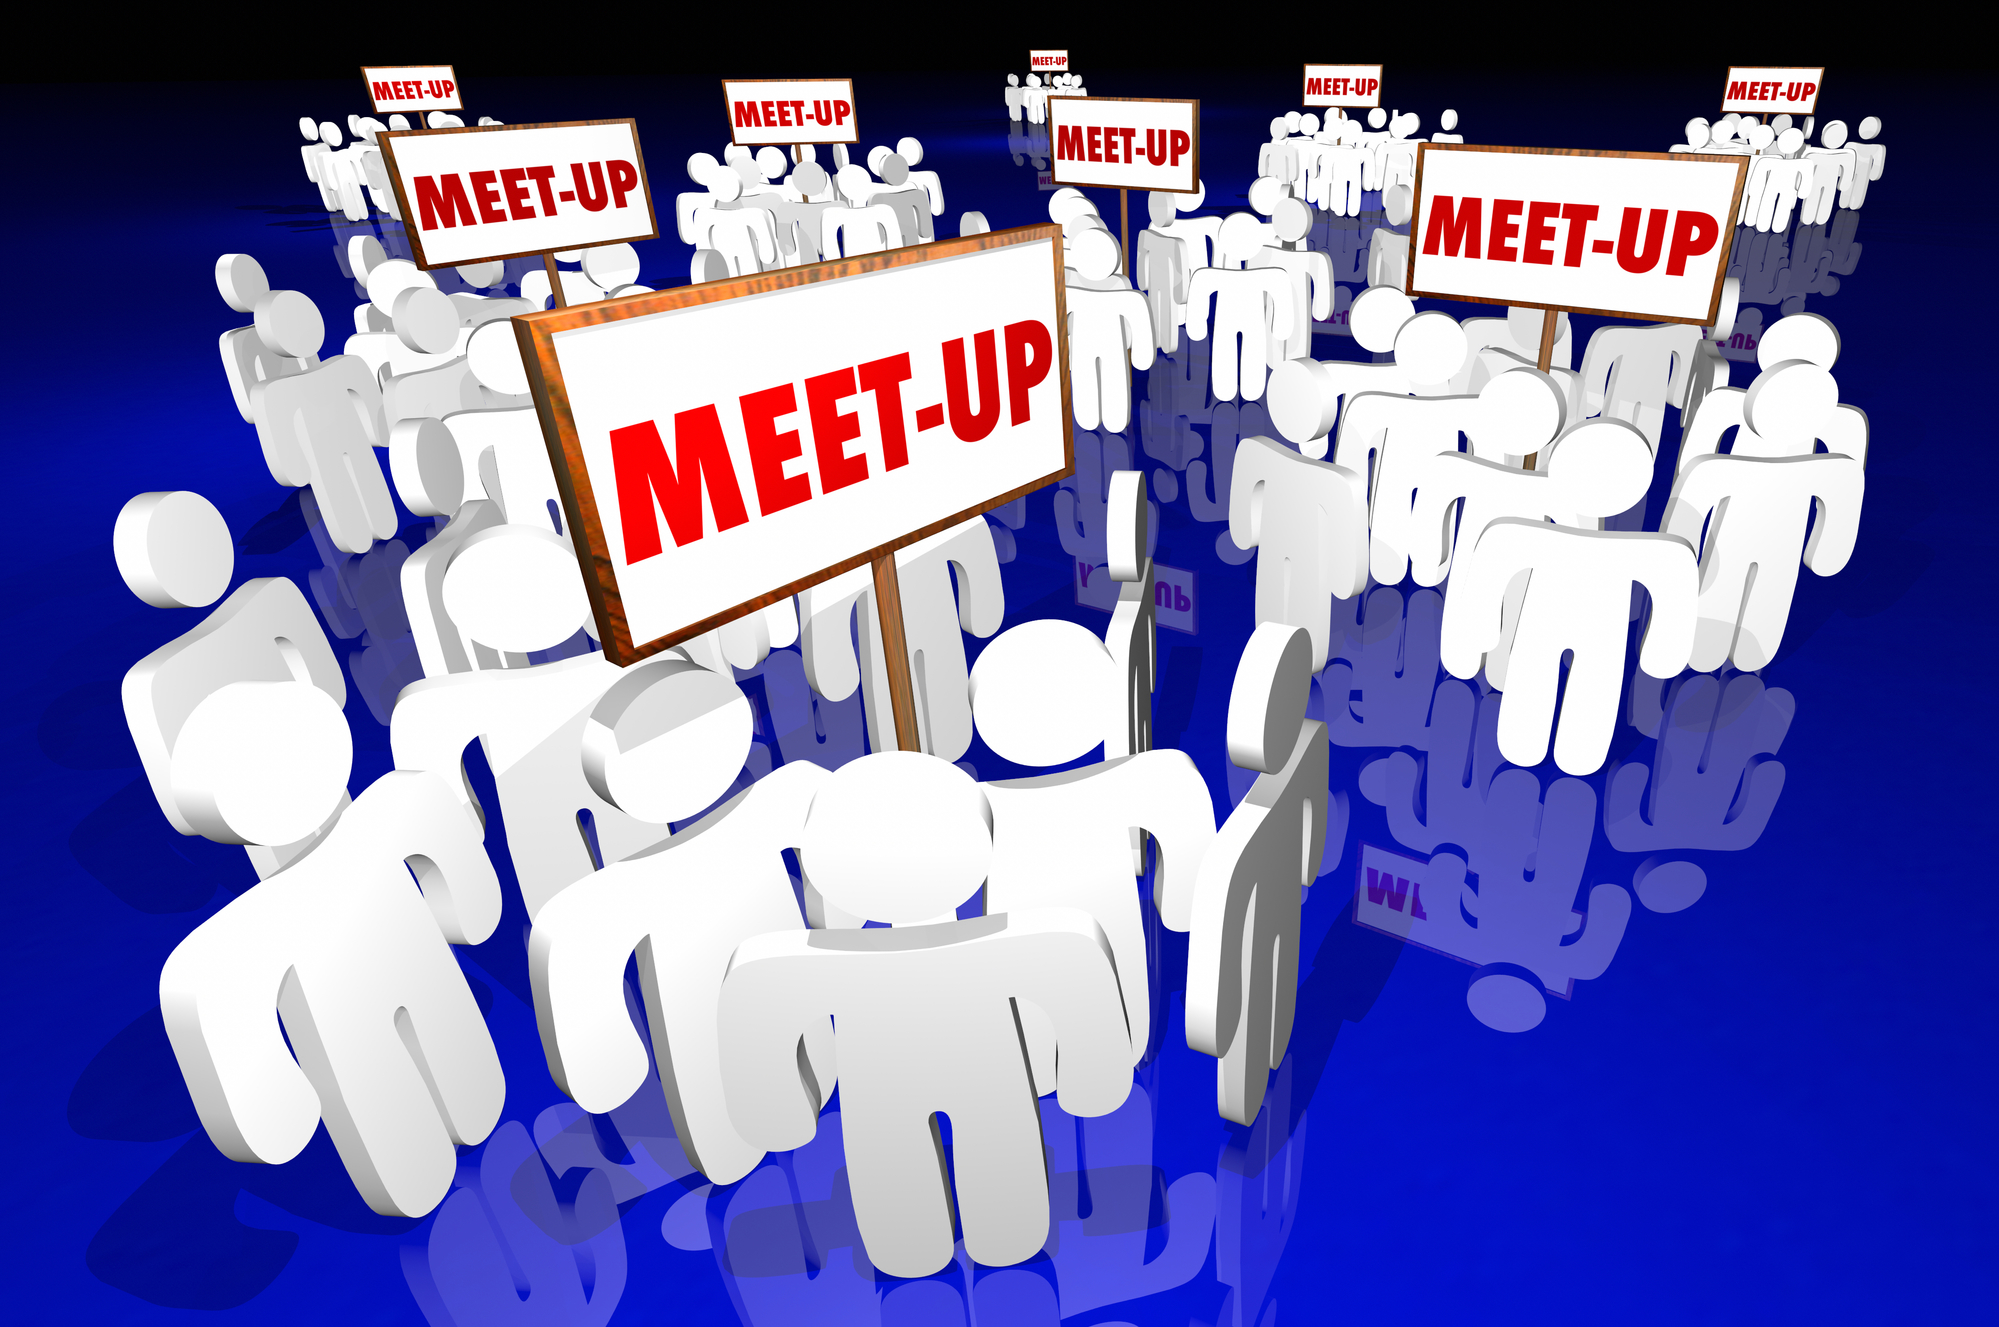 Publicize Meetup Events Through Facebook and LinkedIn